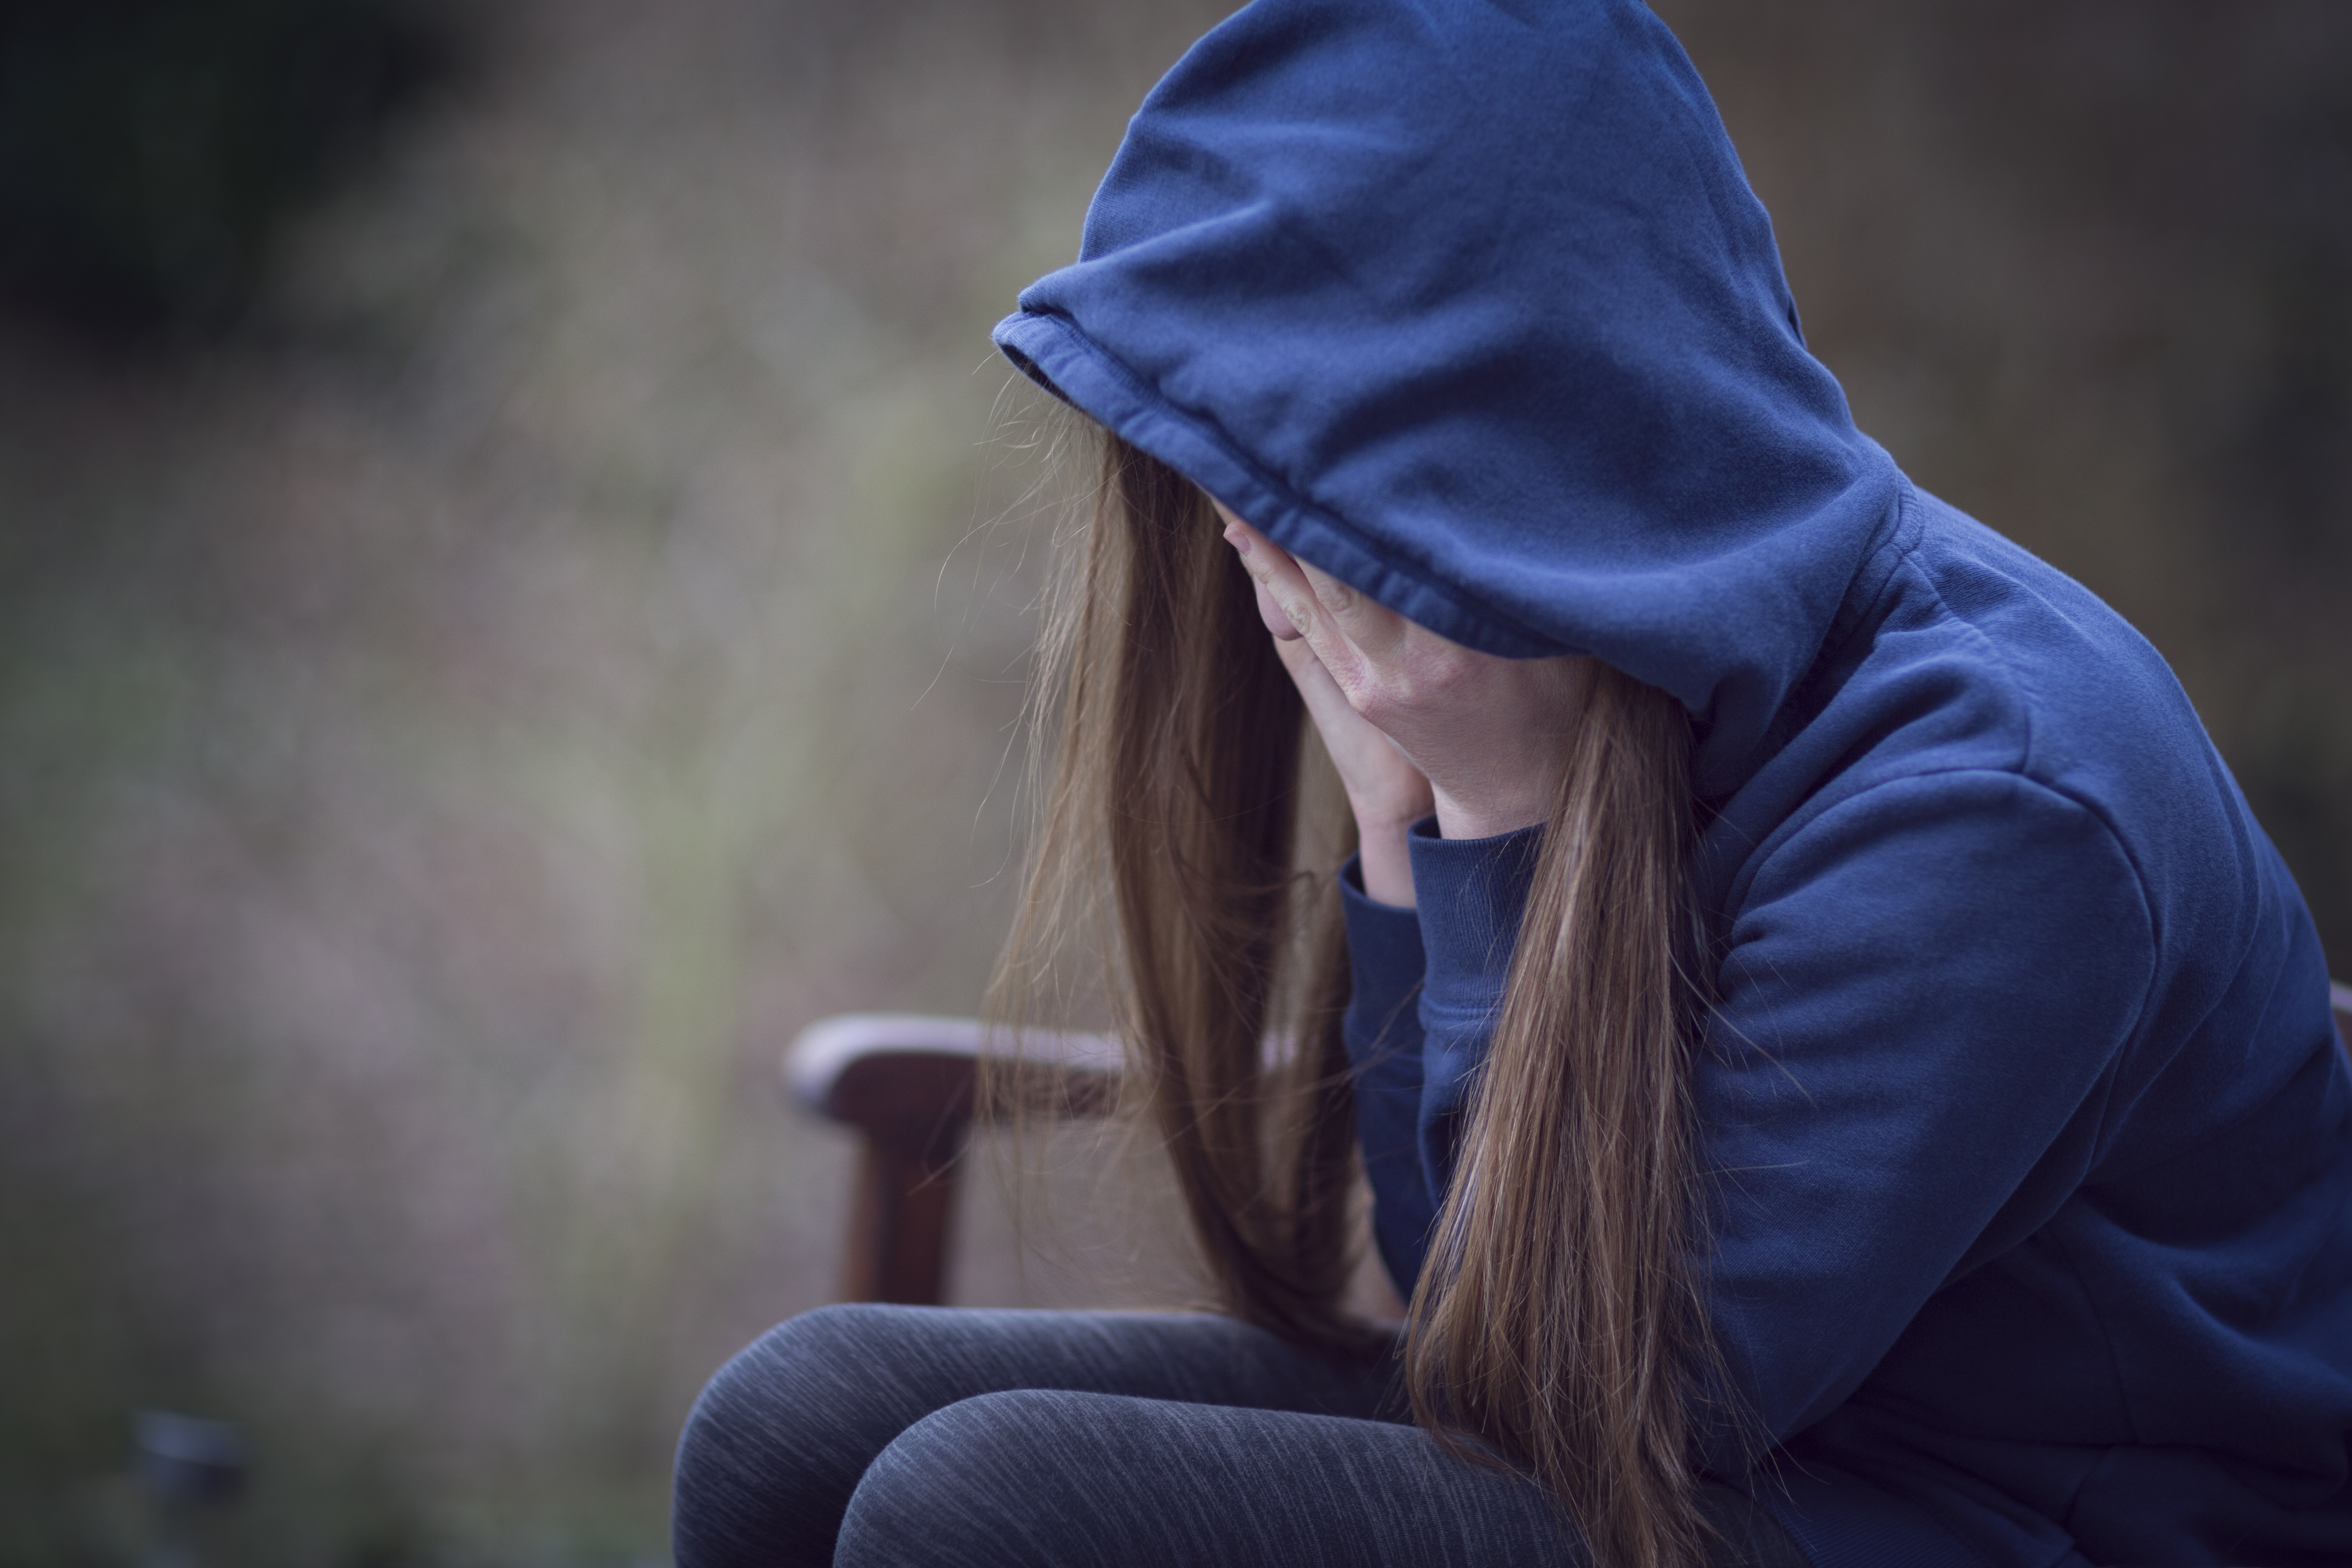 Teenage girl in hooded top, with head in hands in despair | Source: Getty Images